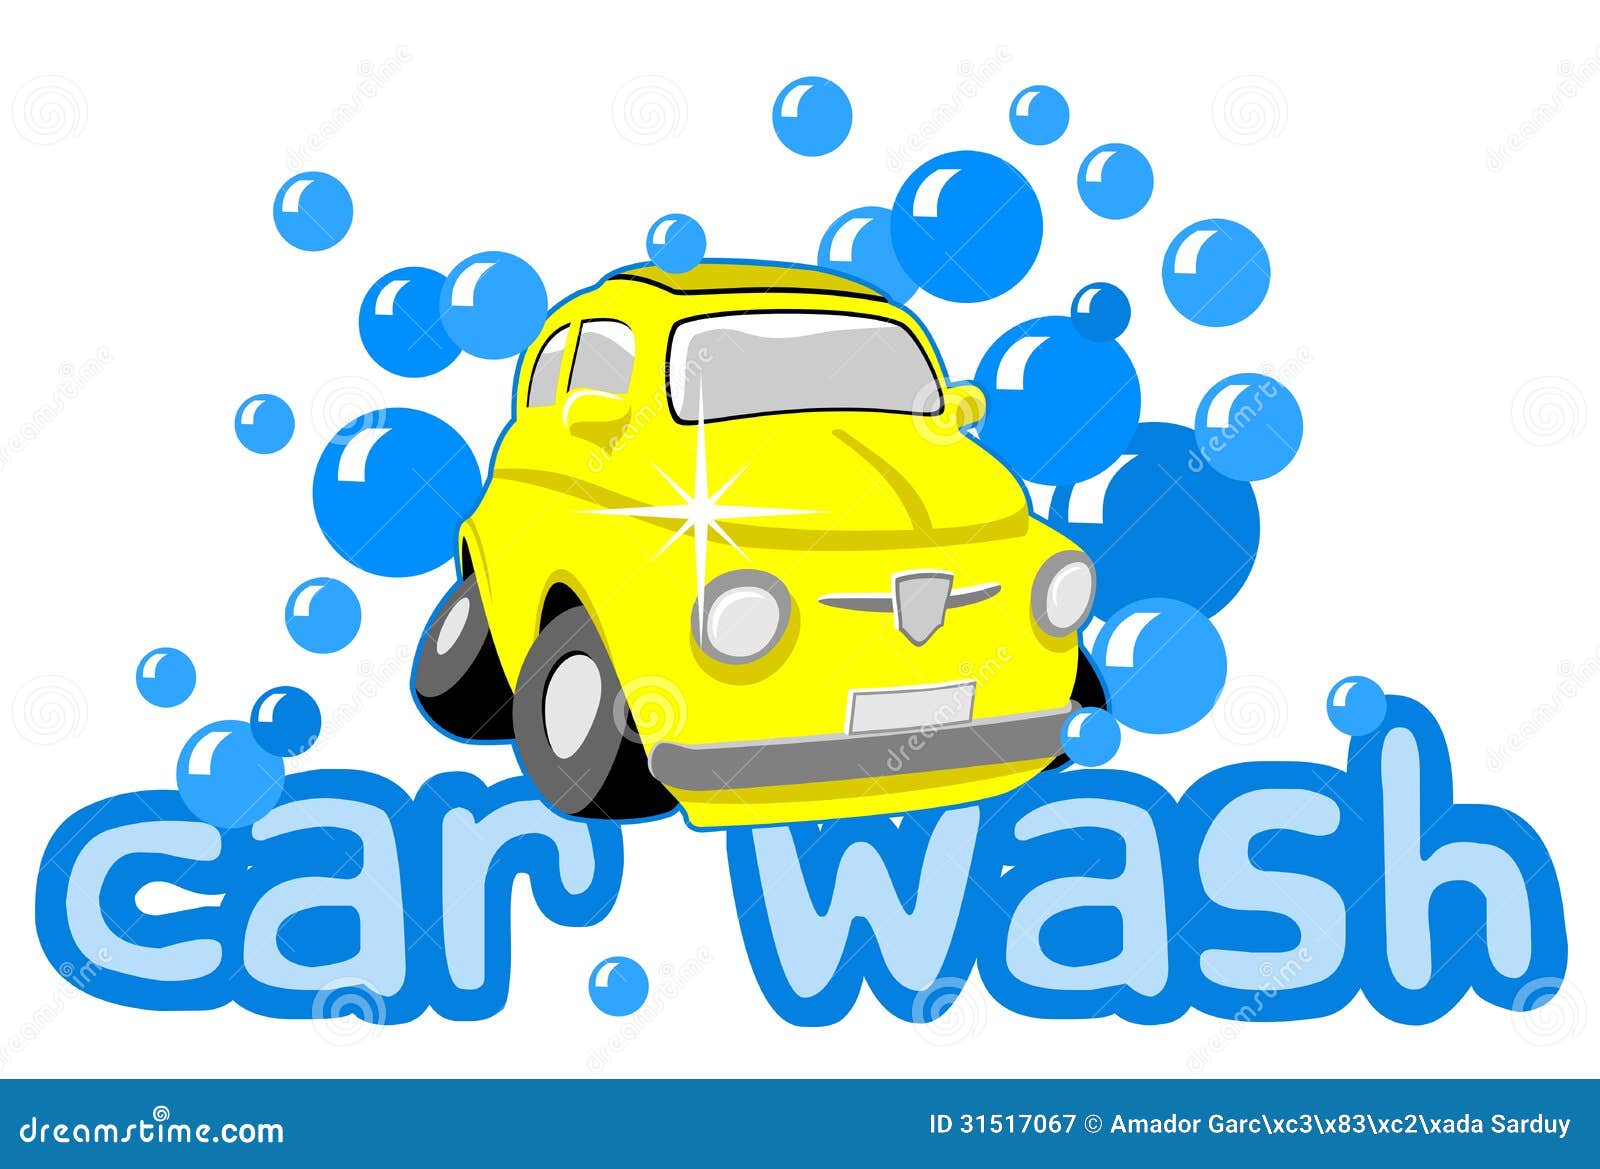 free car wash clip art images - photo #27